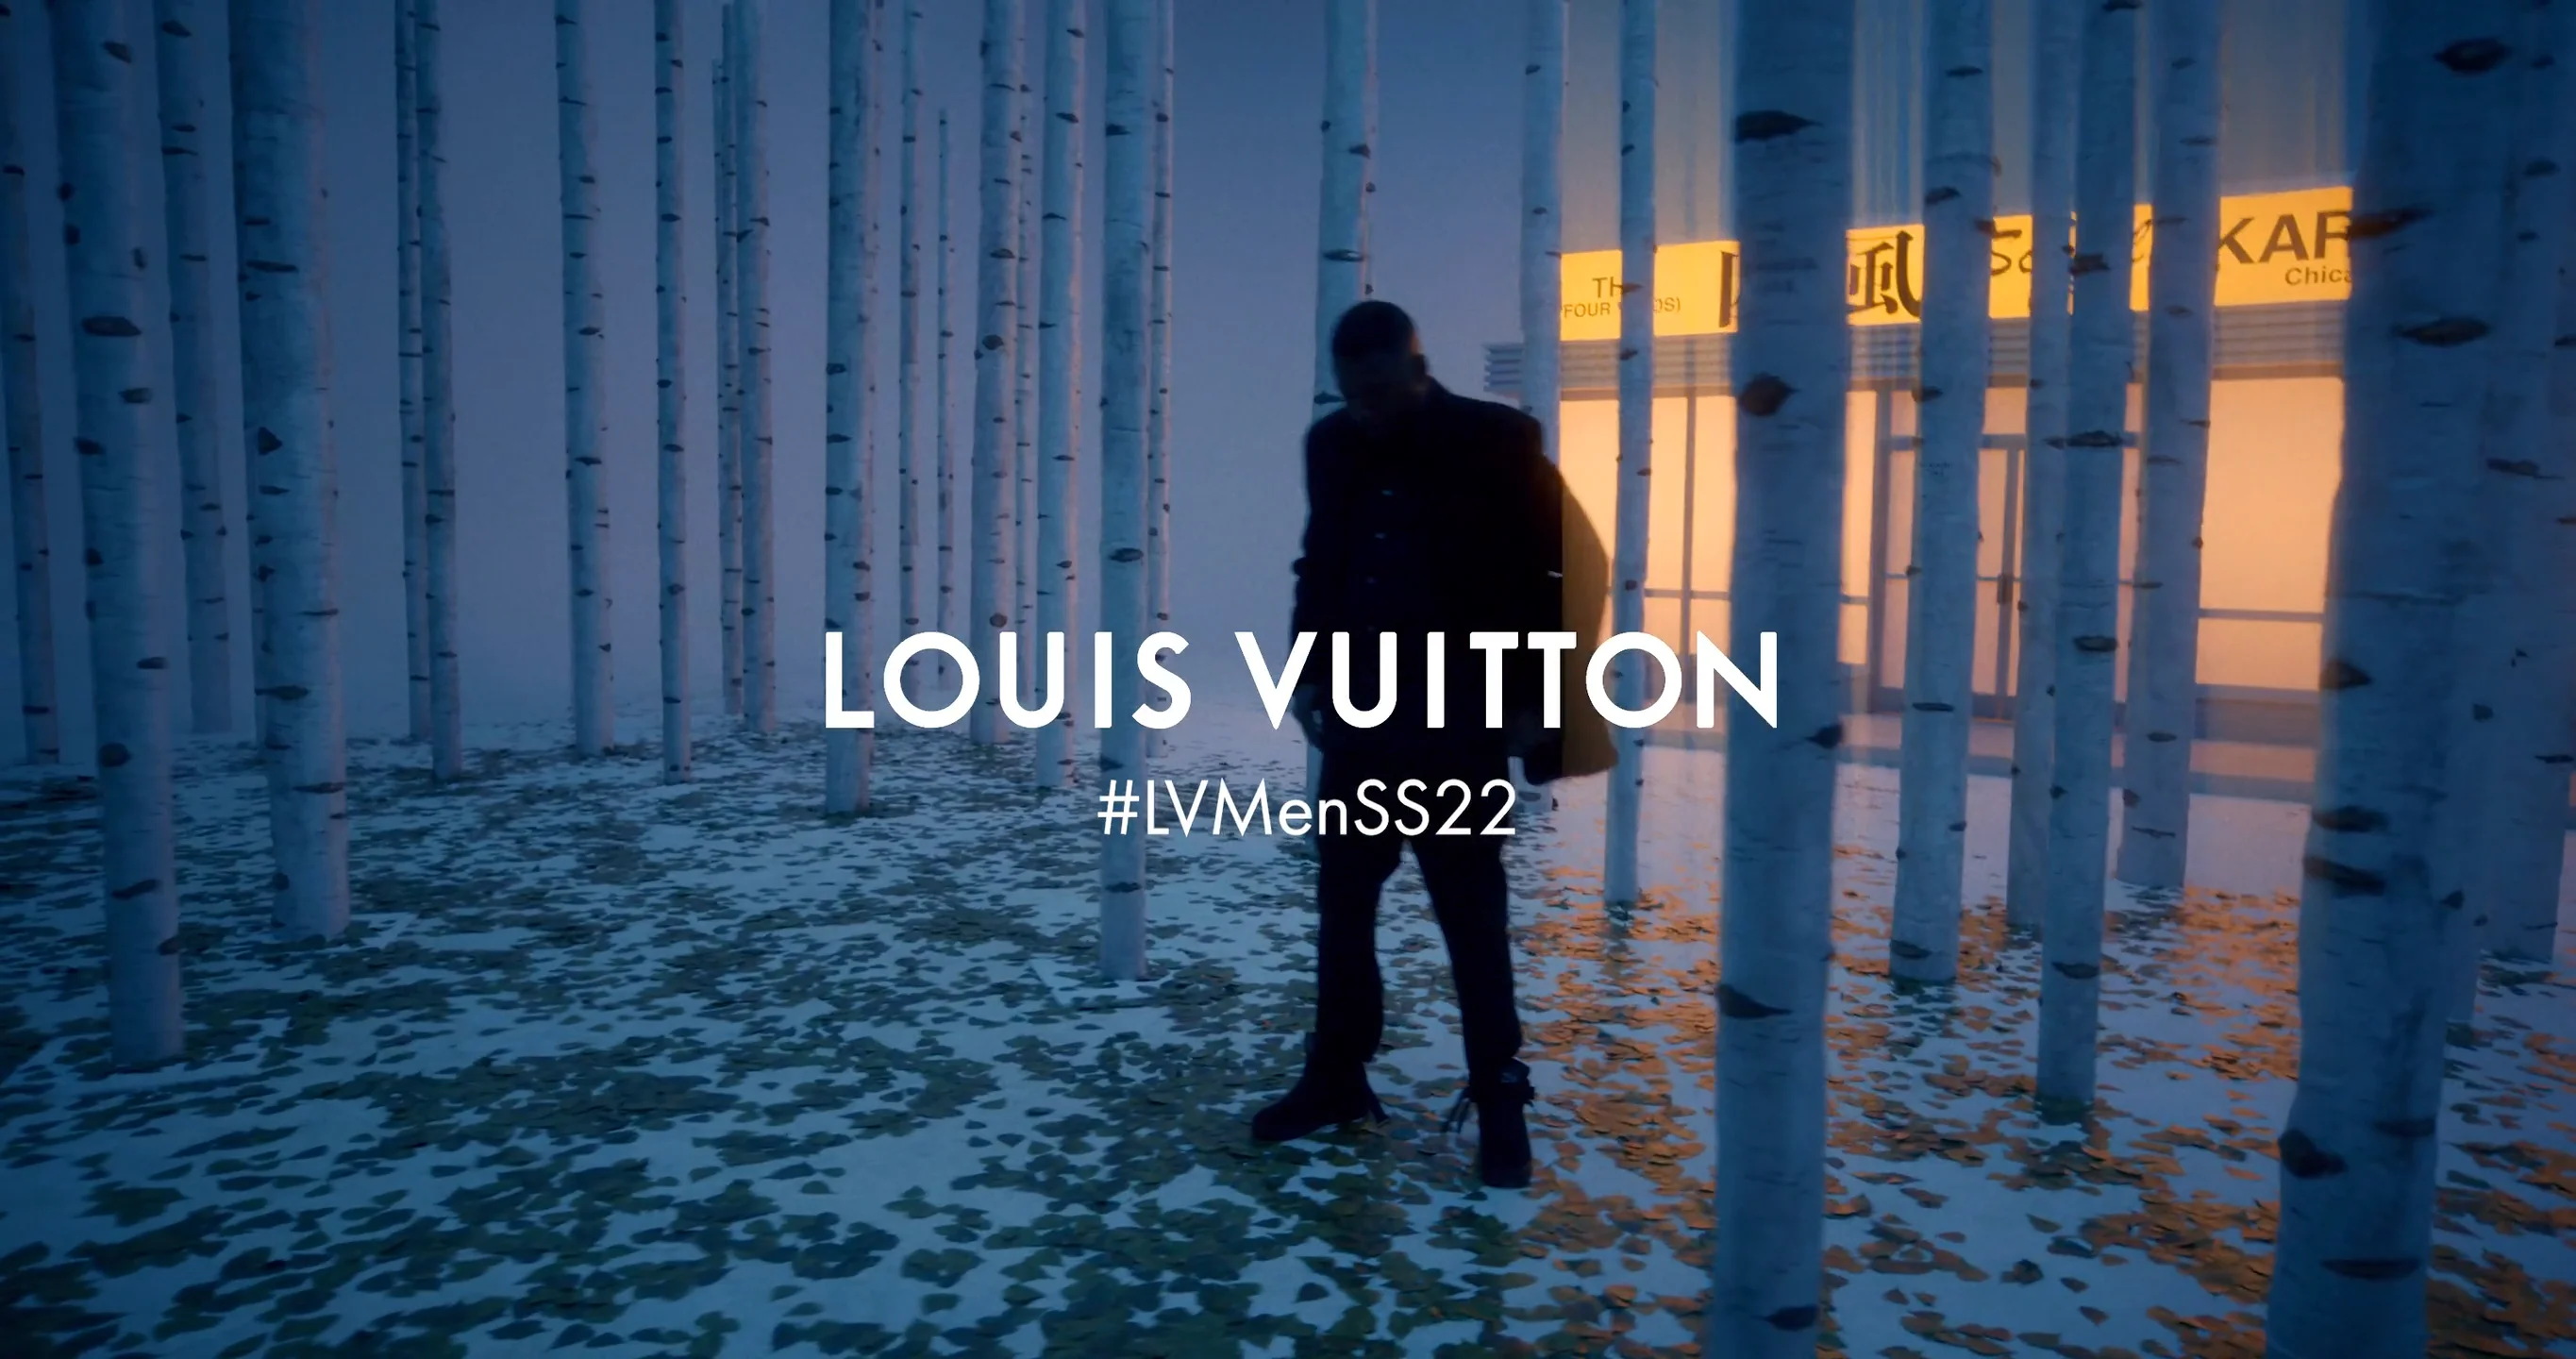 GZA Liquid Swords Amen Break version - Louis Vuitton on Vimeo